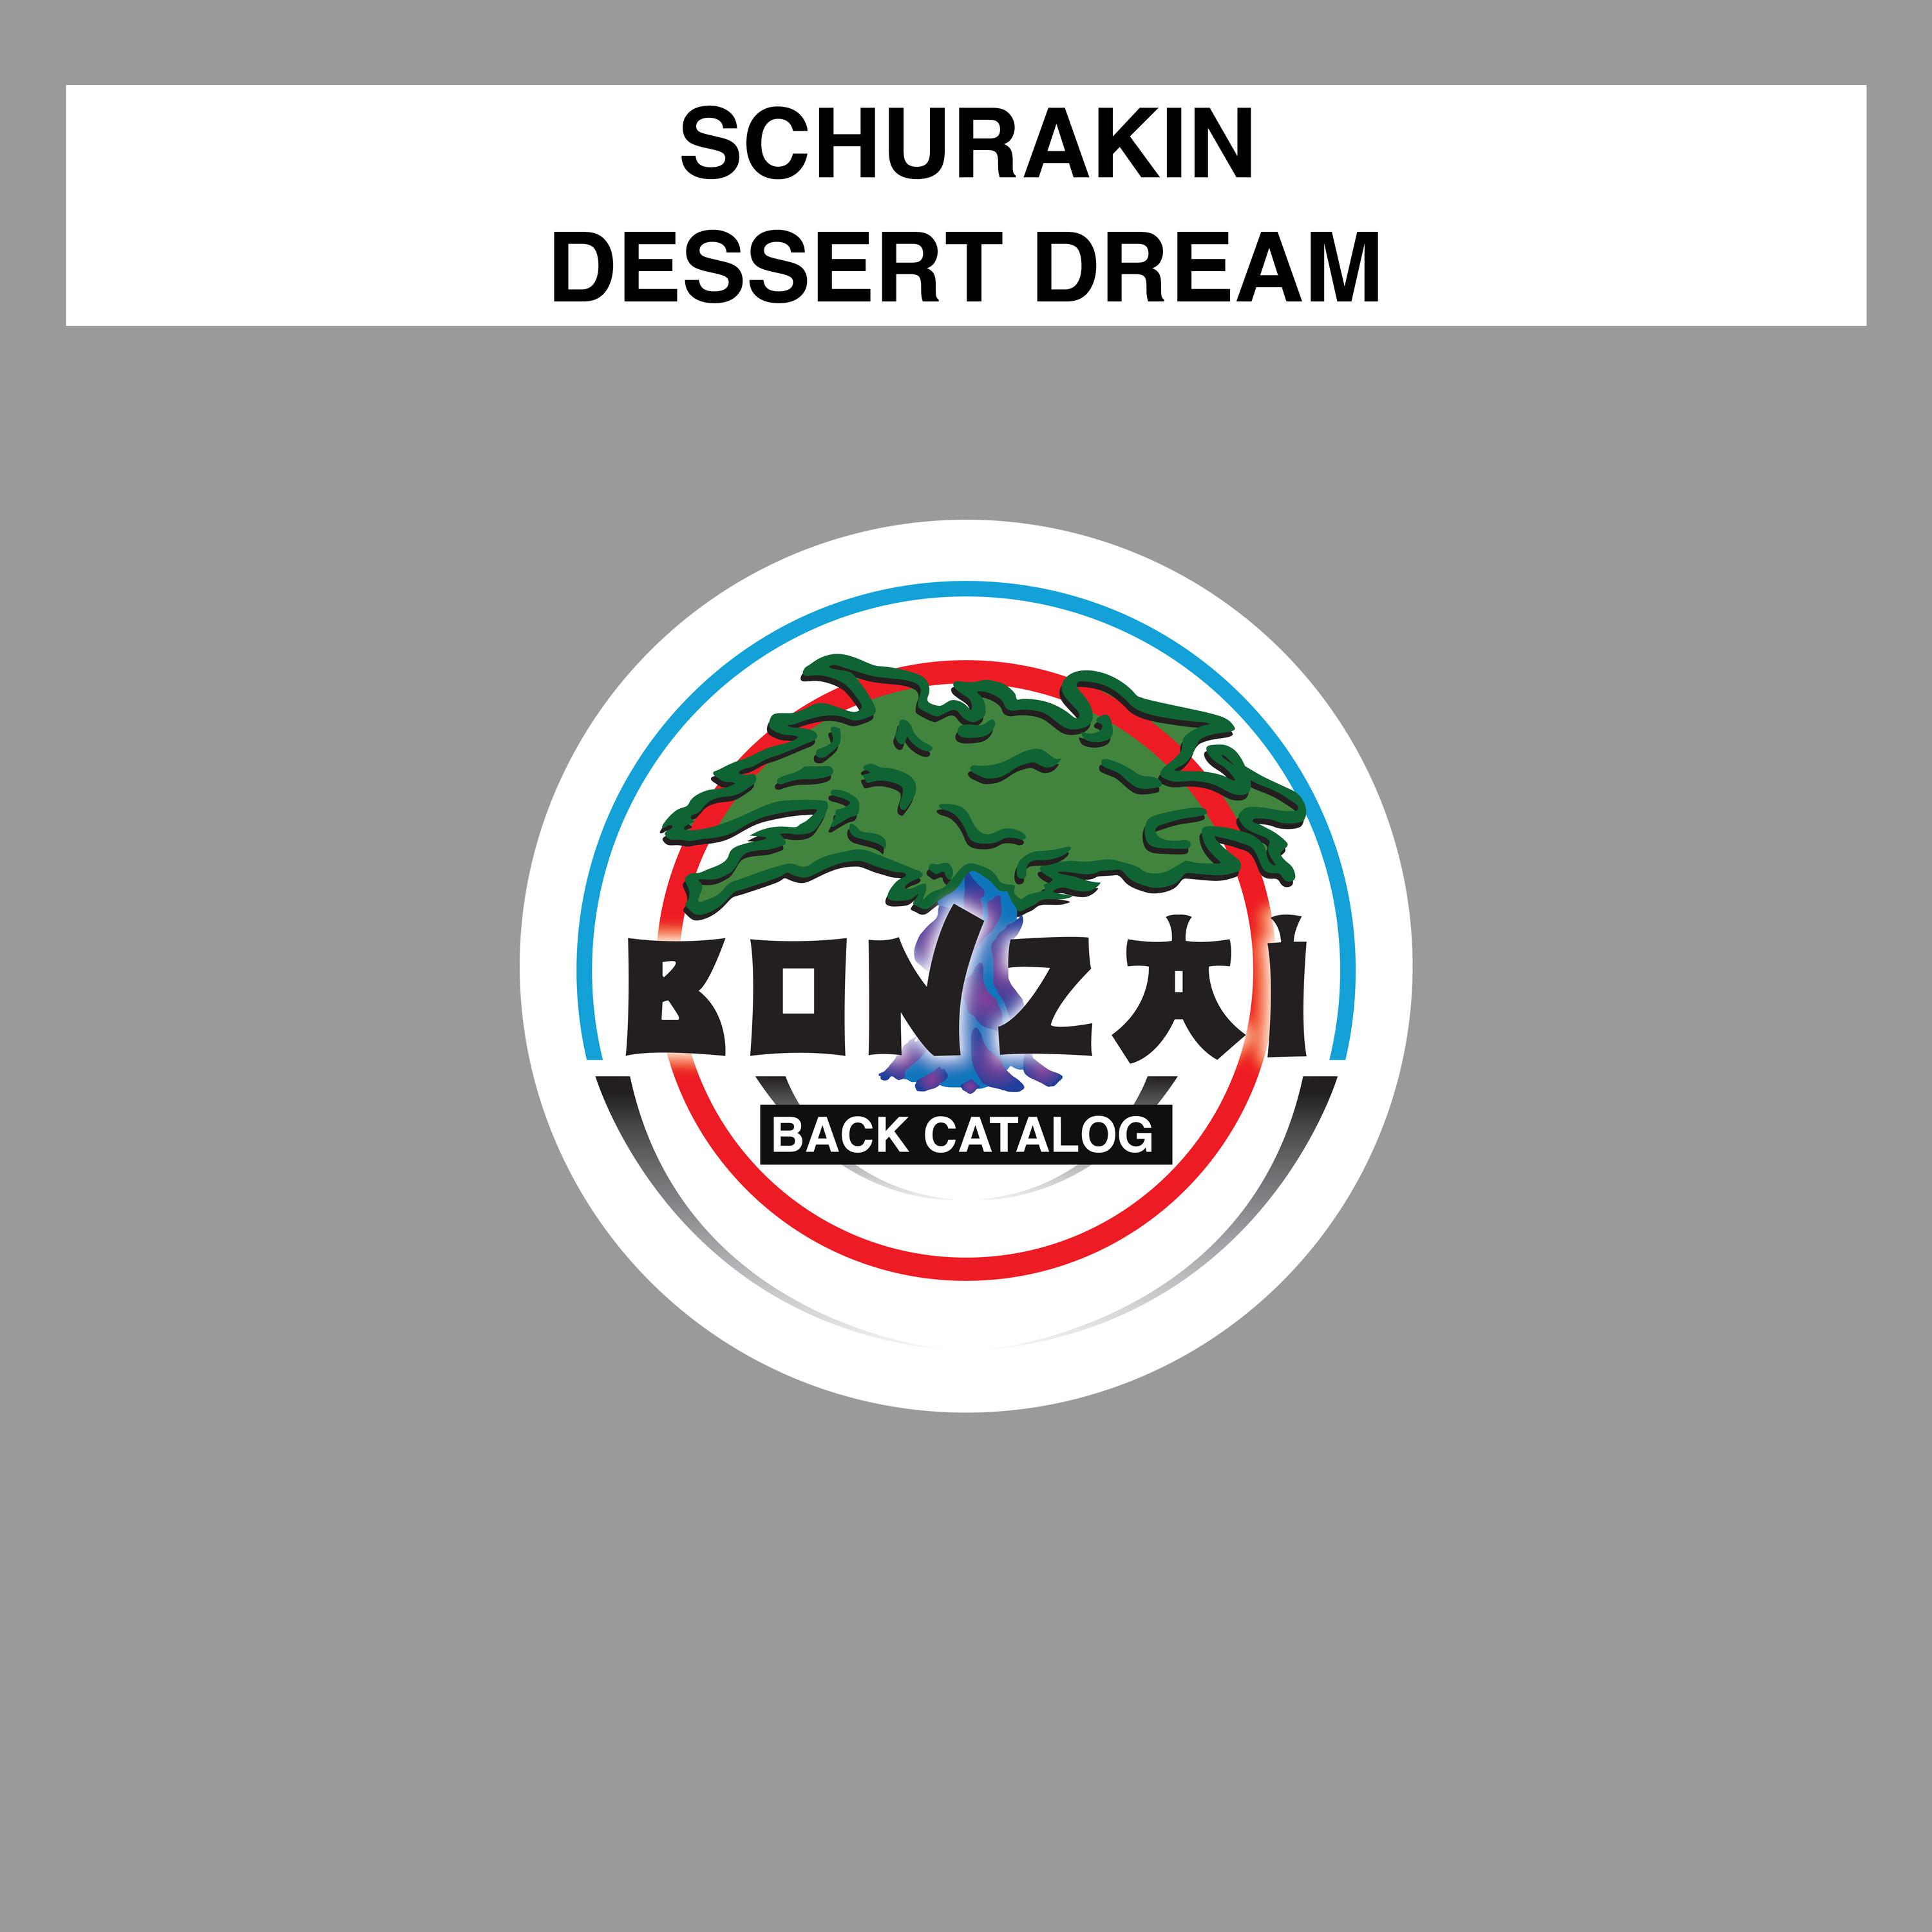 Dessert Dream